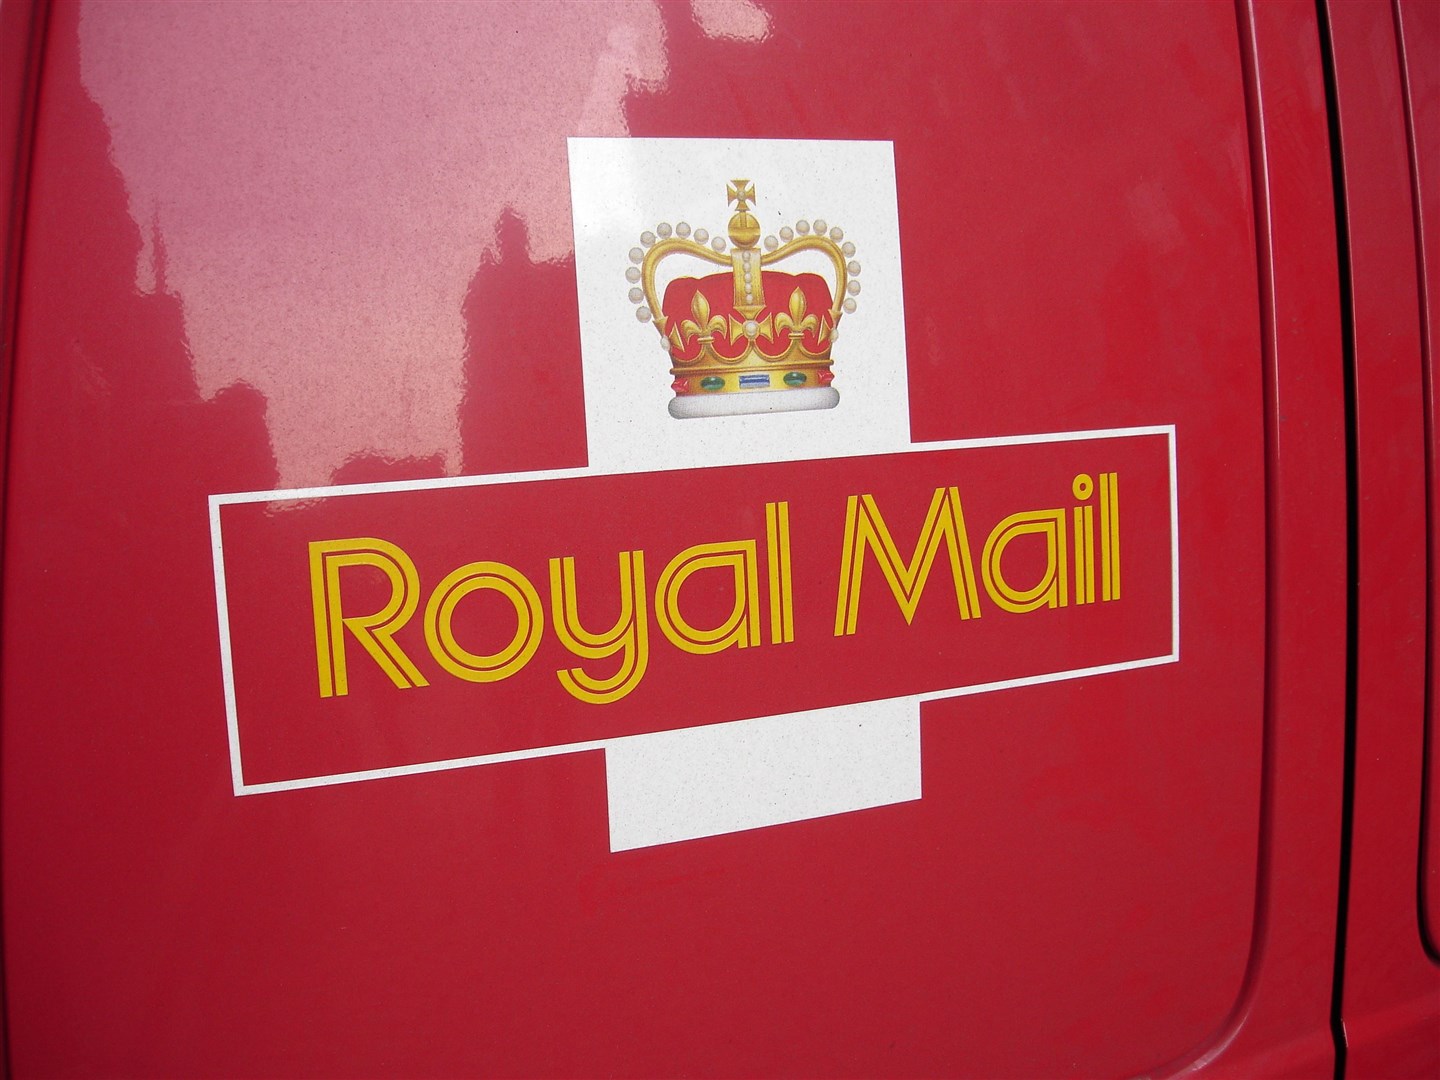 Royal Mail news.